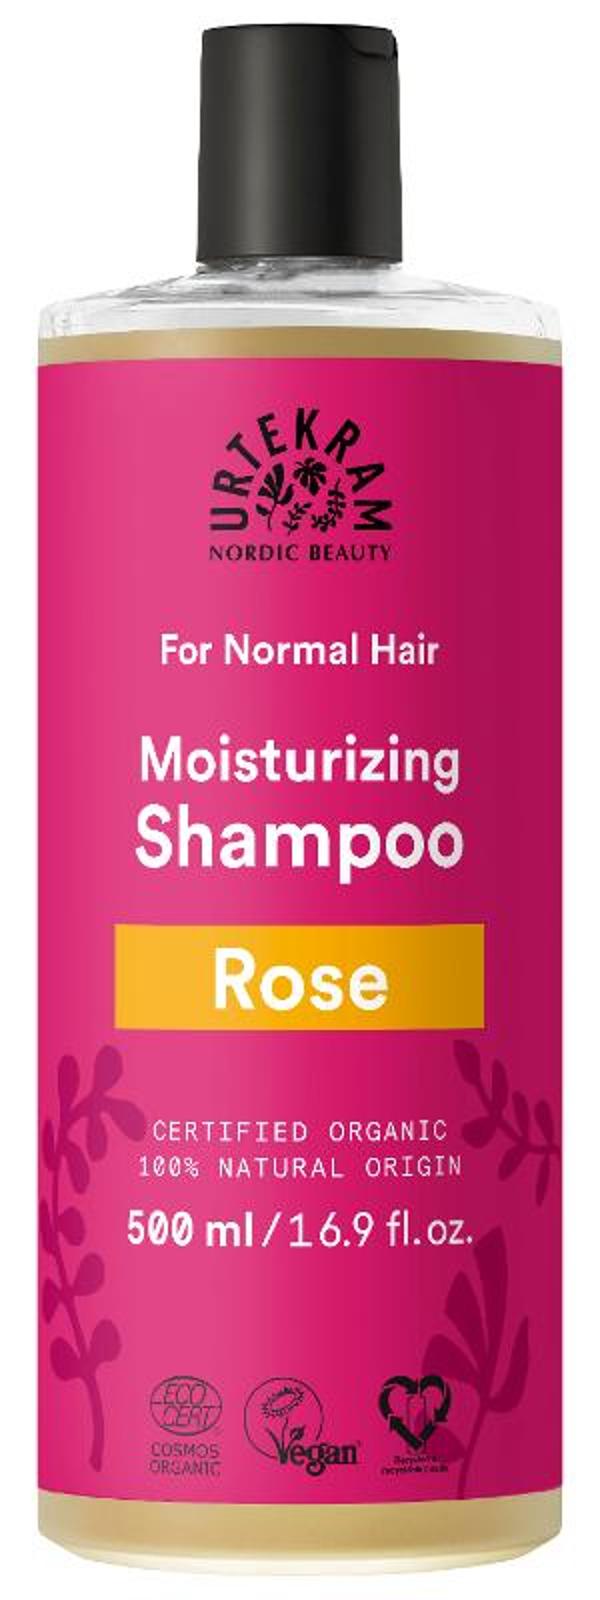 Produktfoto zu Rose Shampoo normales Haar 500ml